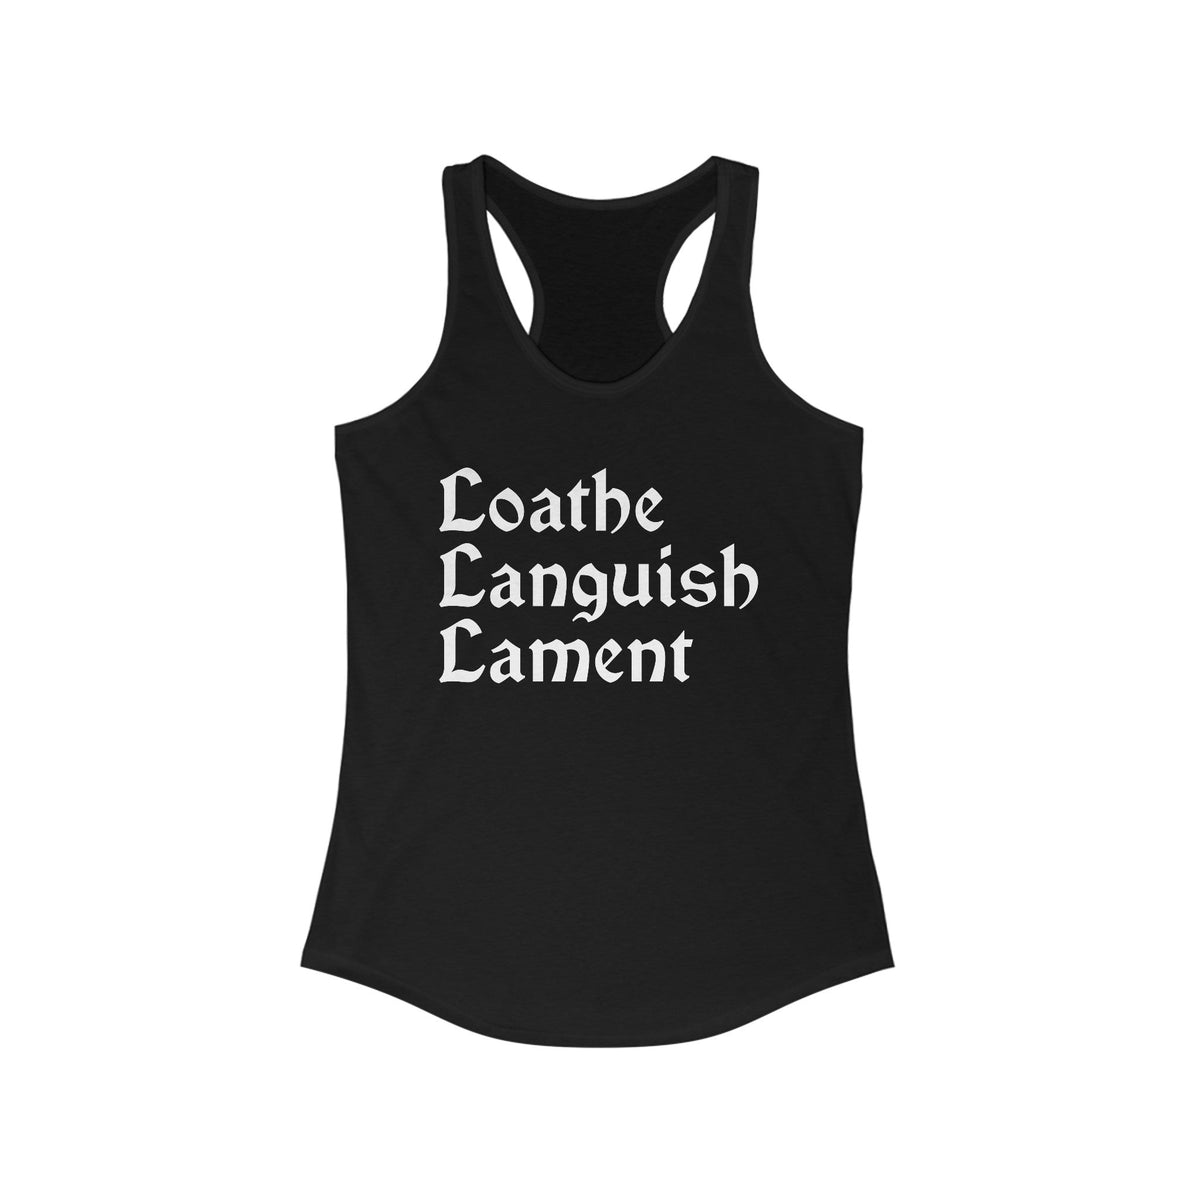 Loathe Languish Lament Racerback Tank - Goth Cloth Co.Tank Top12984930445415595308